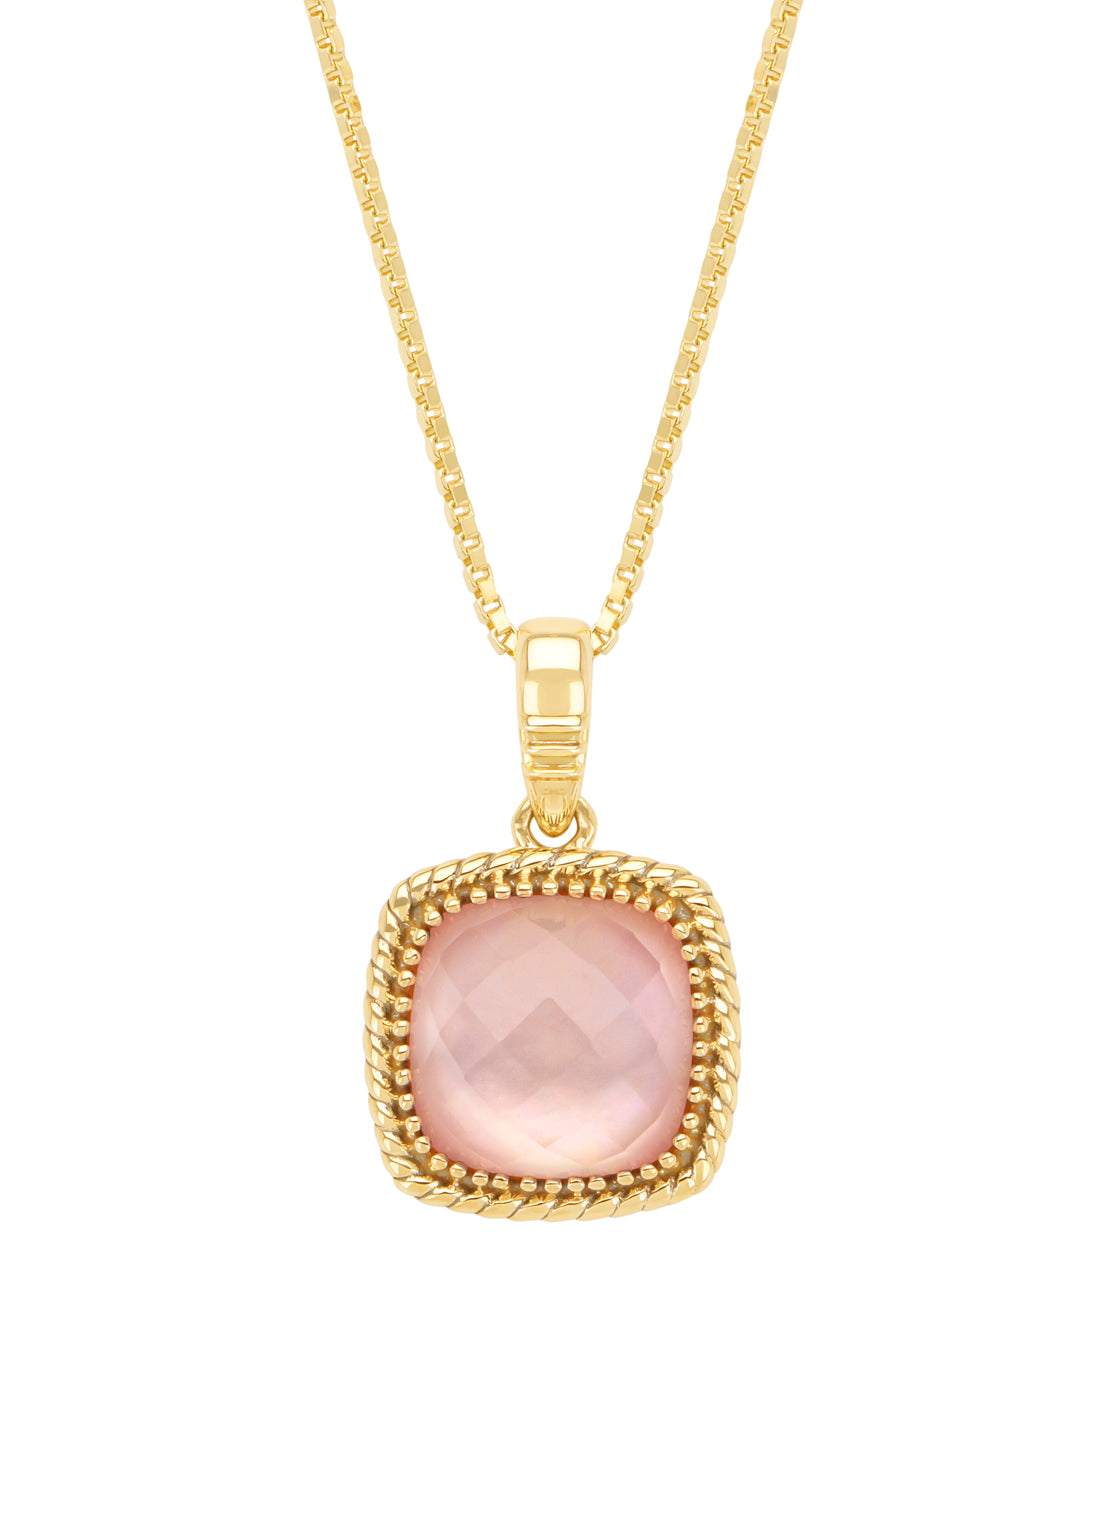 Yellow gold pendant, 3.68 ct pink quartz with pearl, velvet